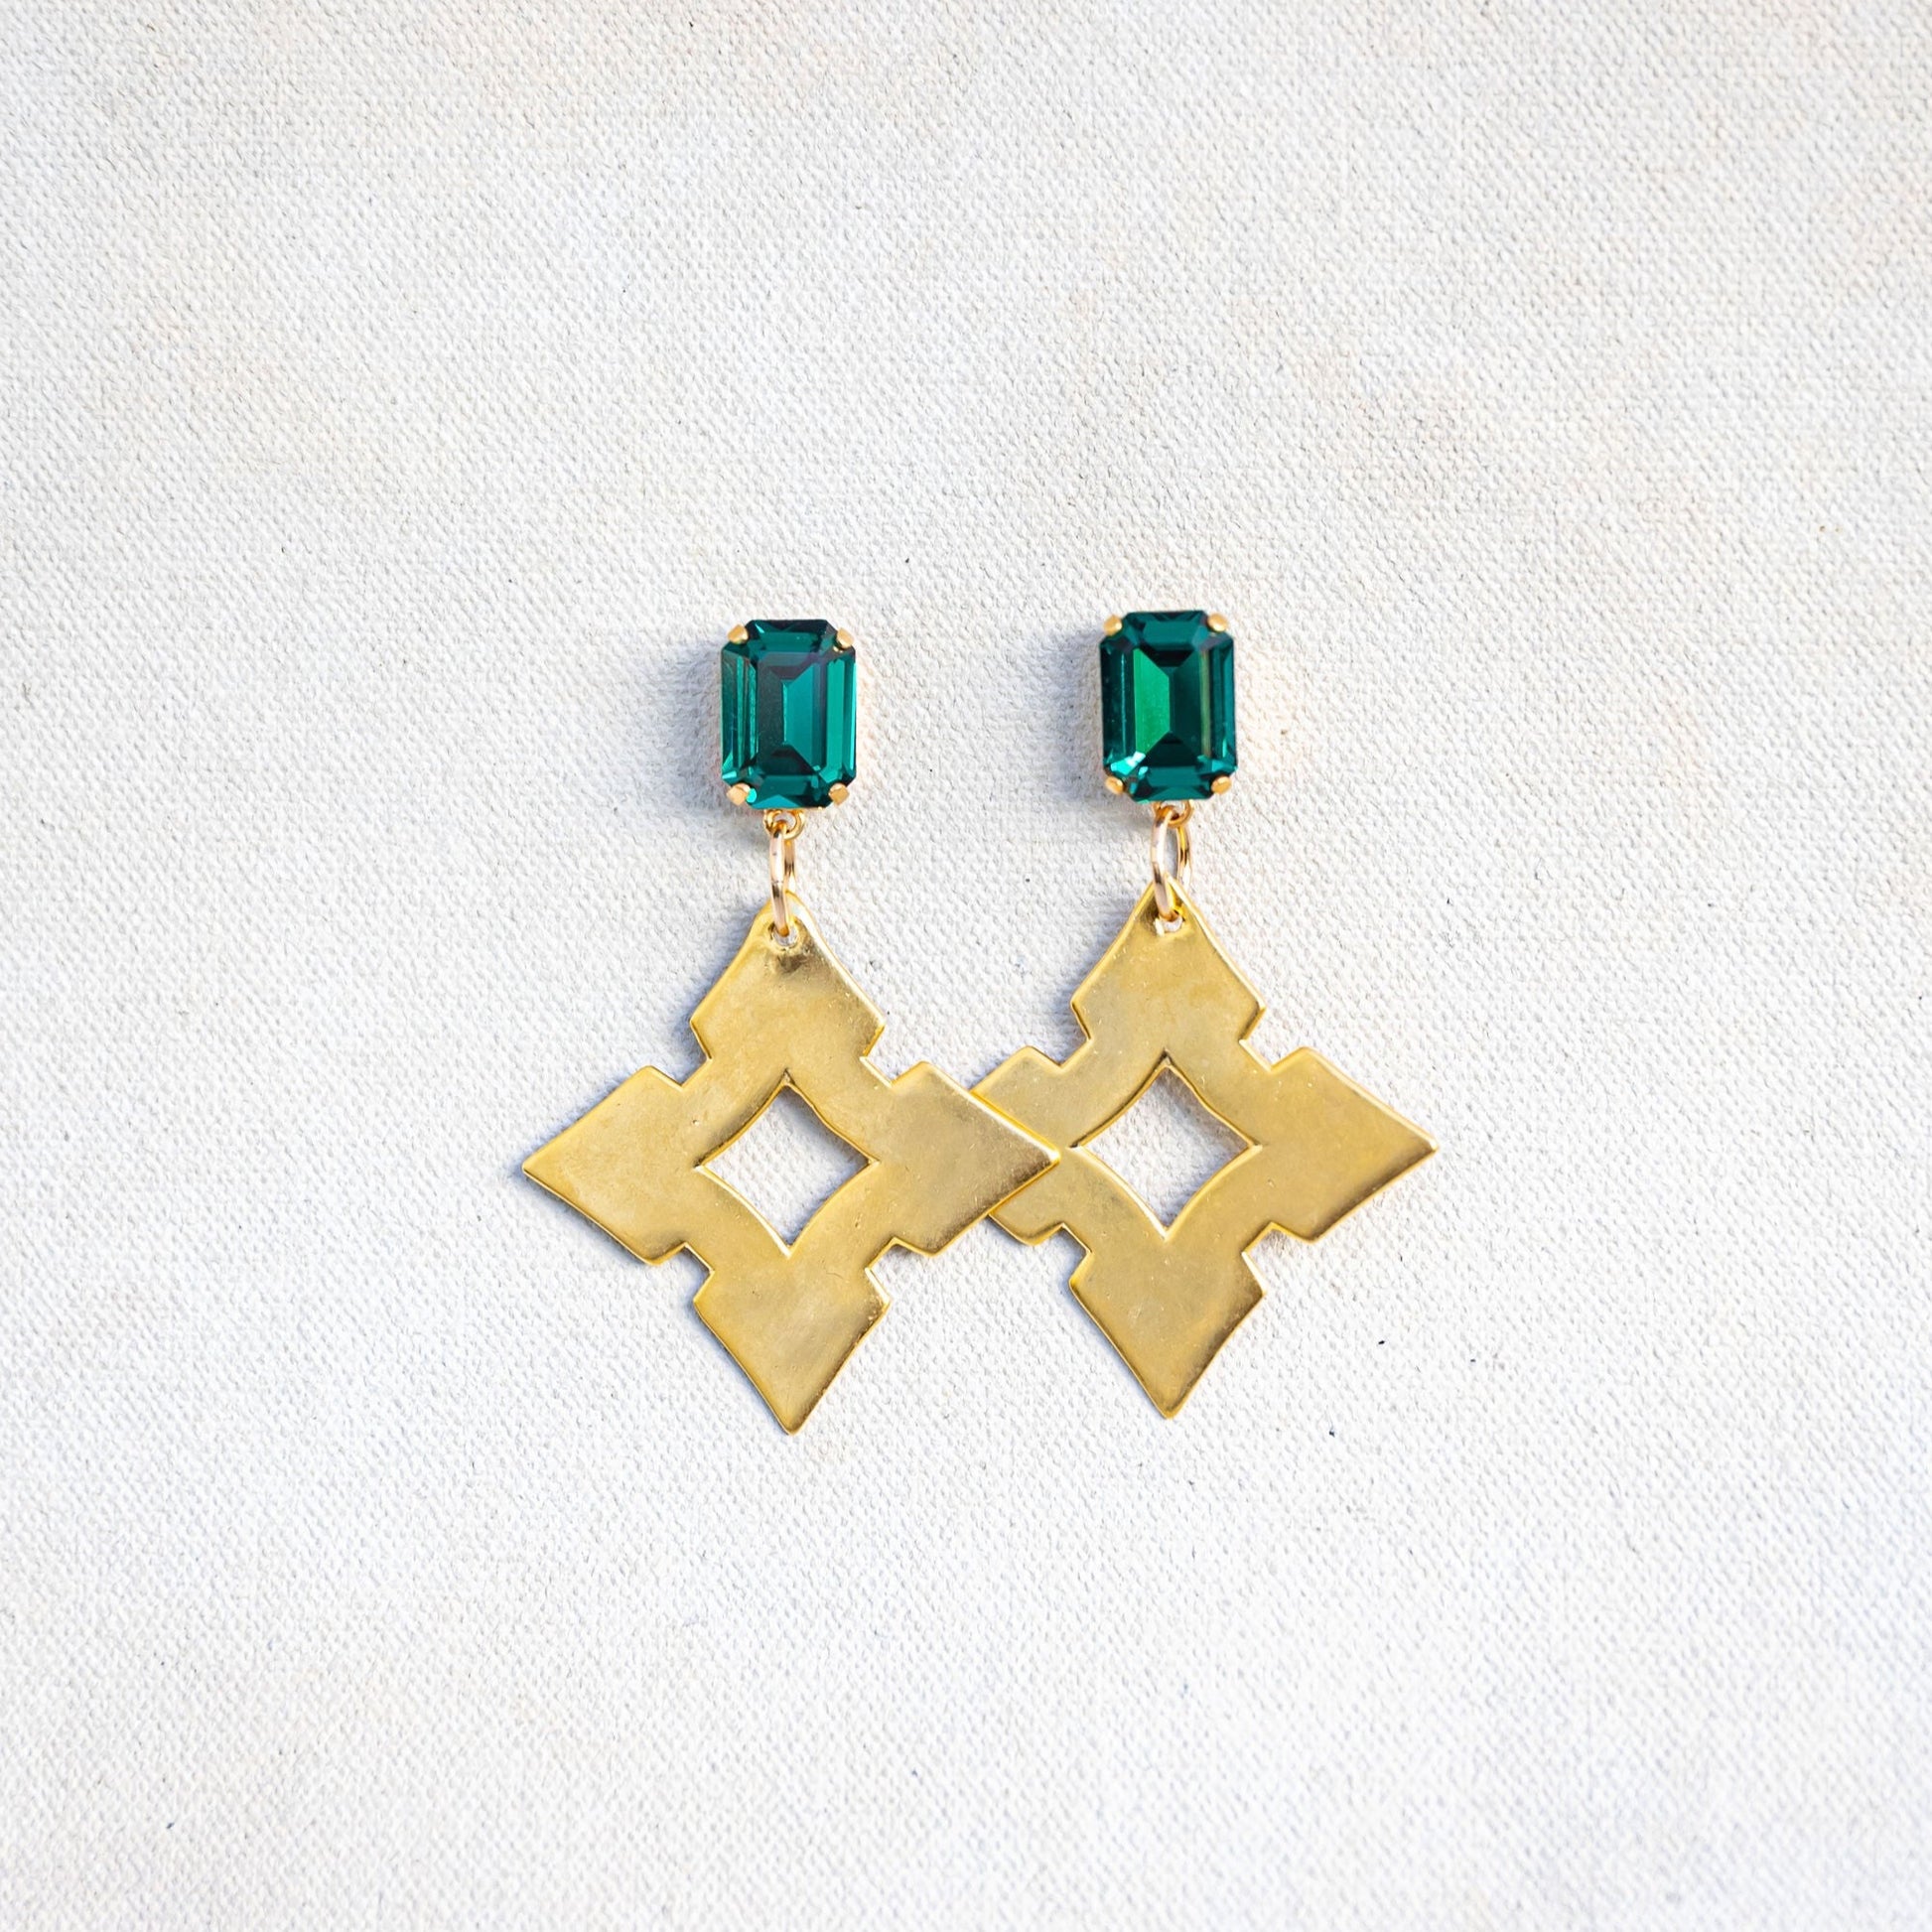 The Emerald Focus Earrings